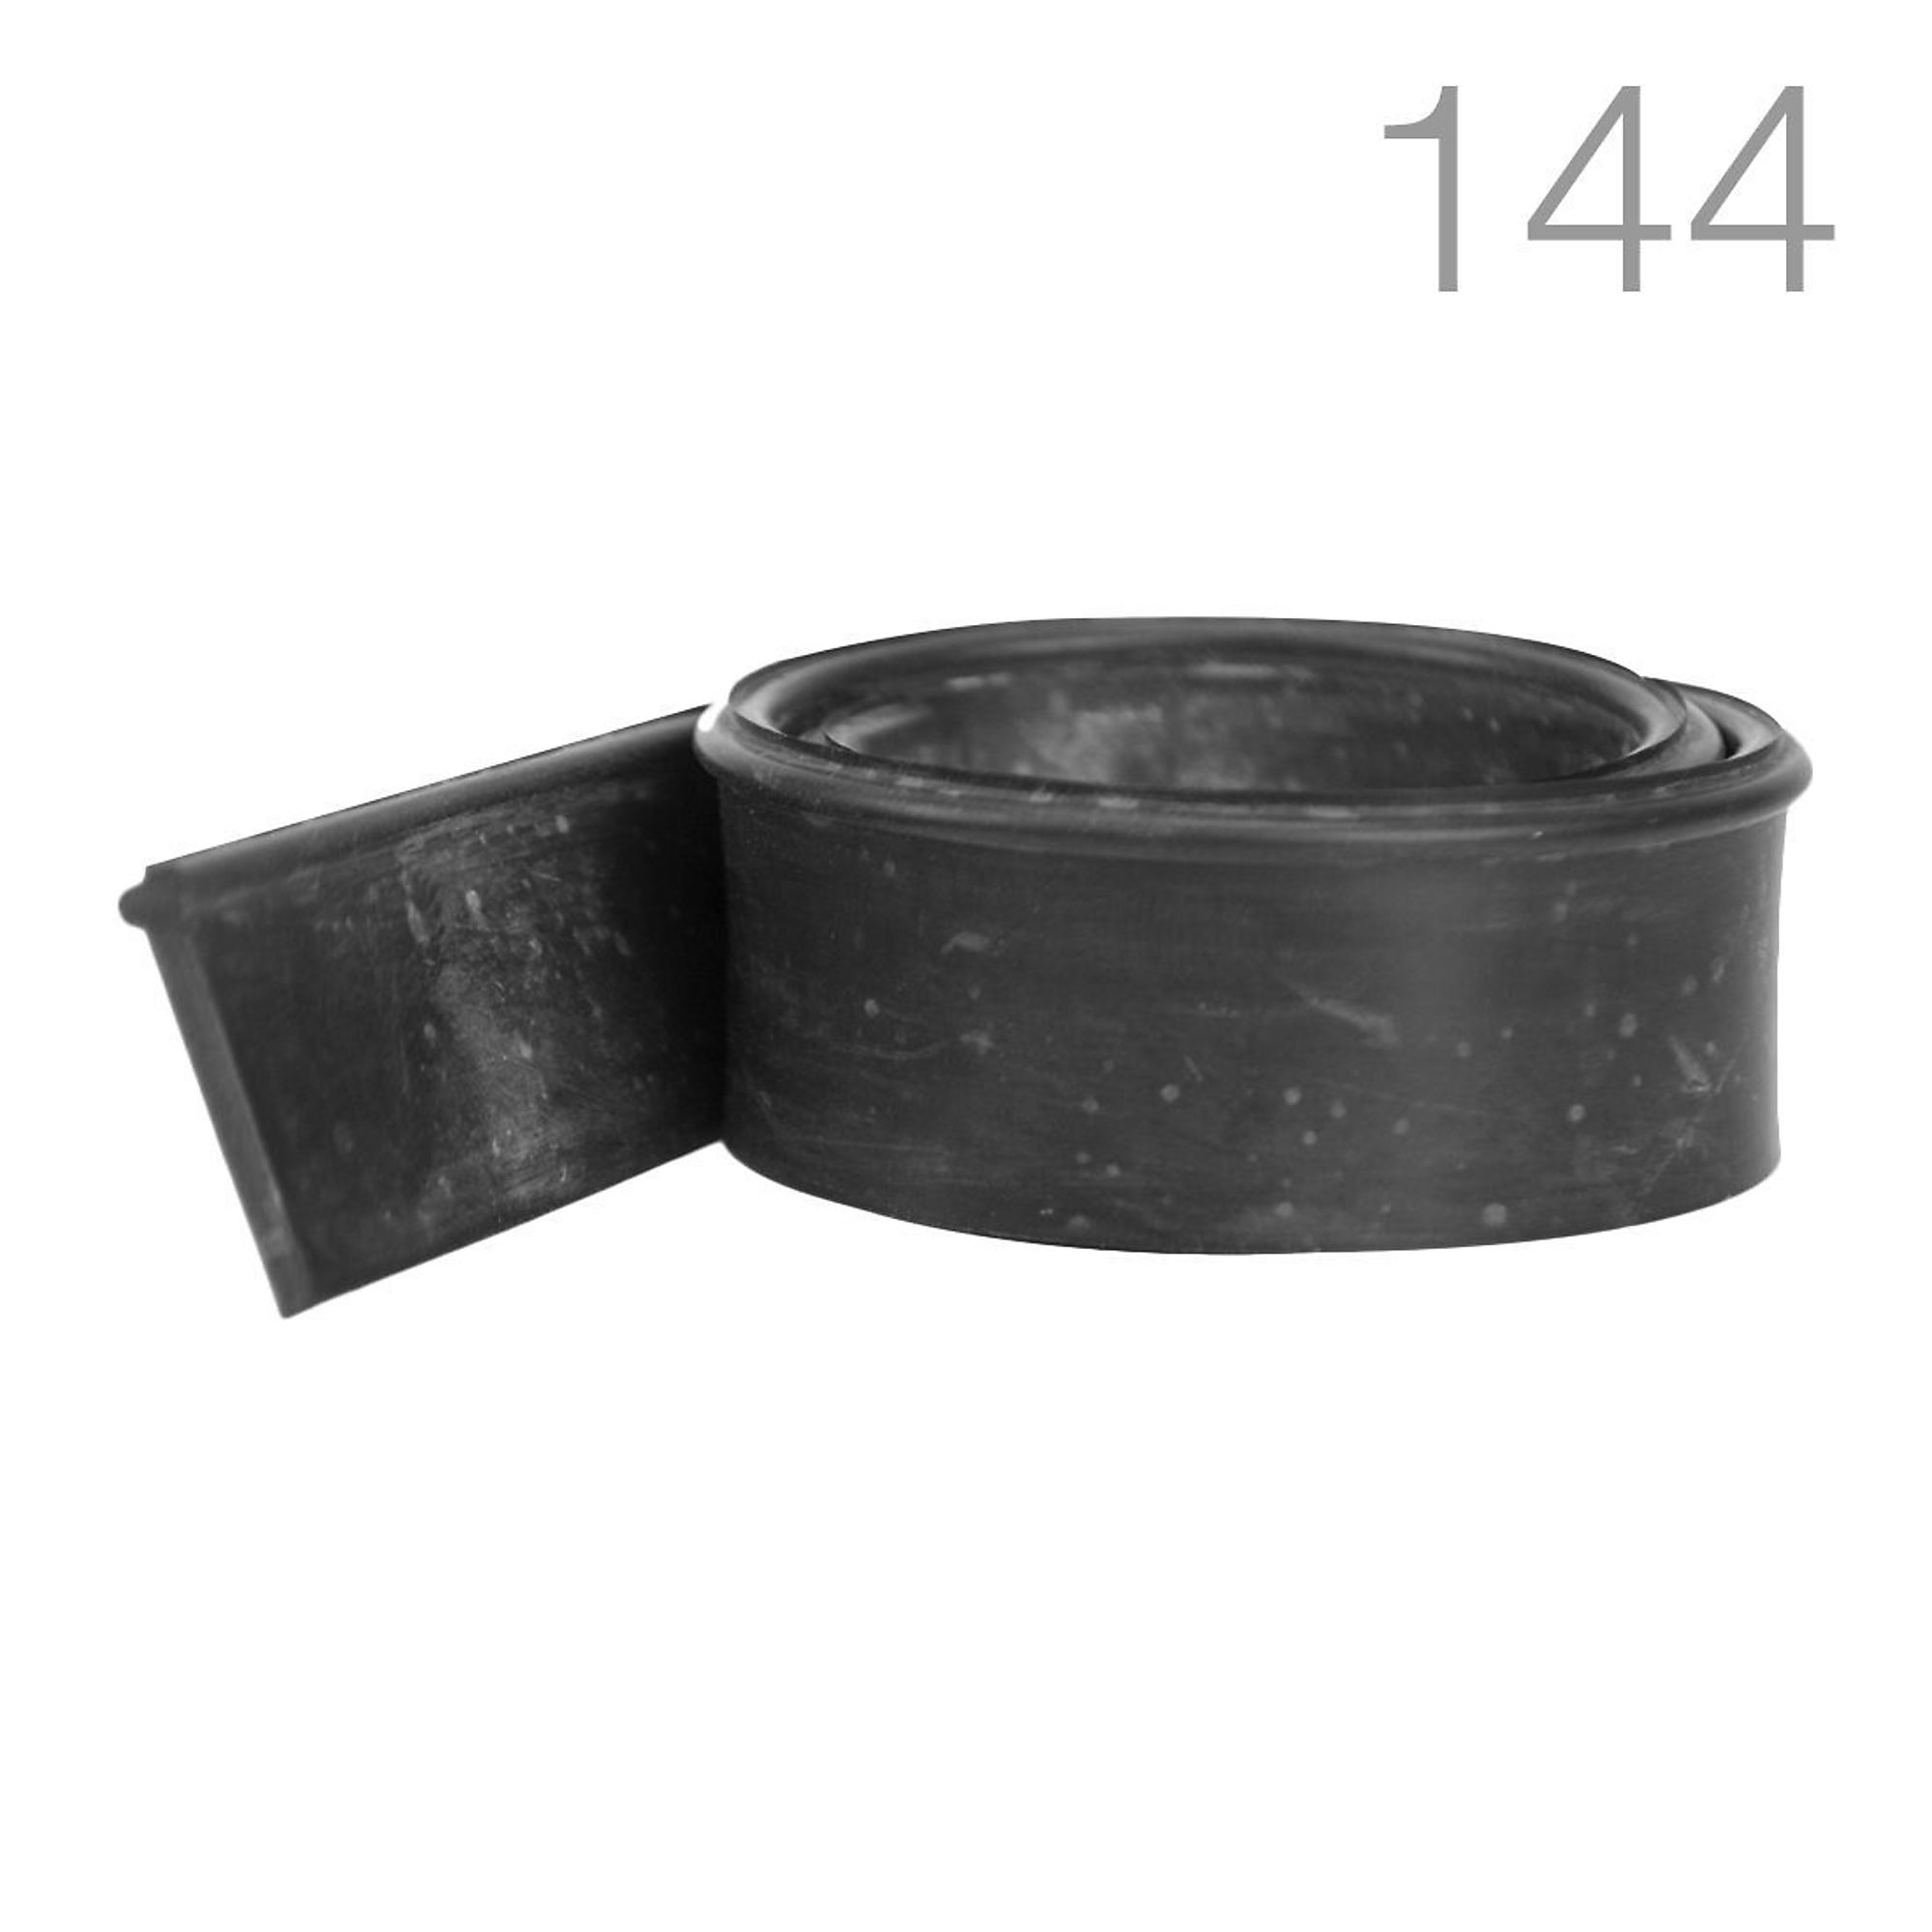 BlackDiamond, Flat Top Medium Squeegee Rubber Gross - 37Inch, Model 012-05-64